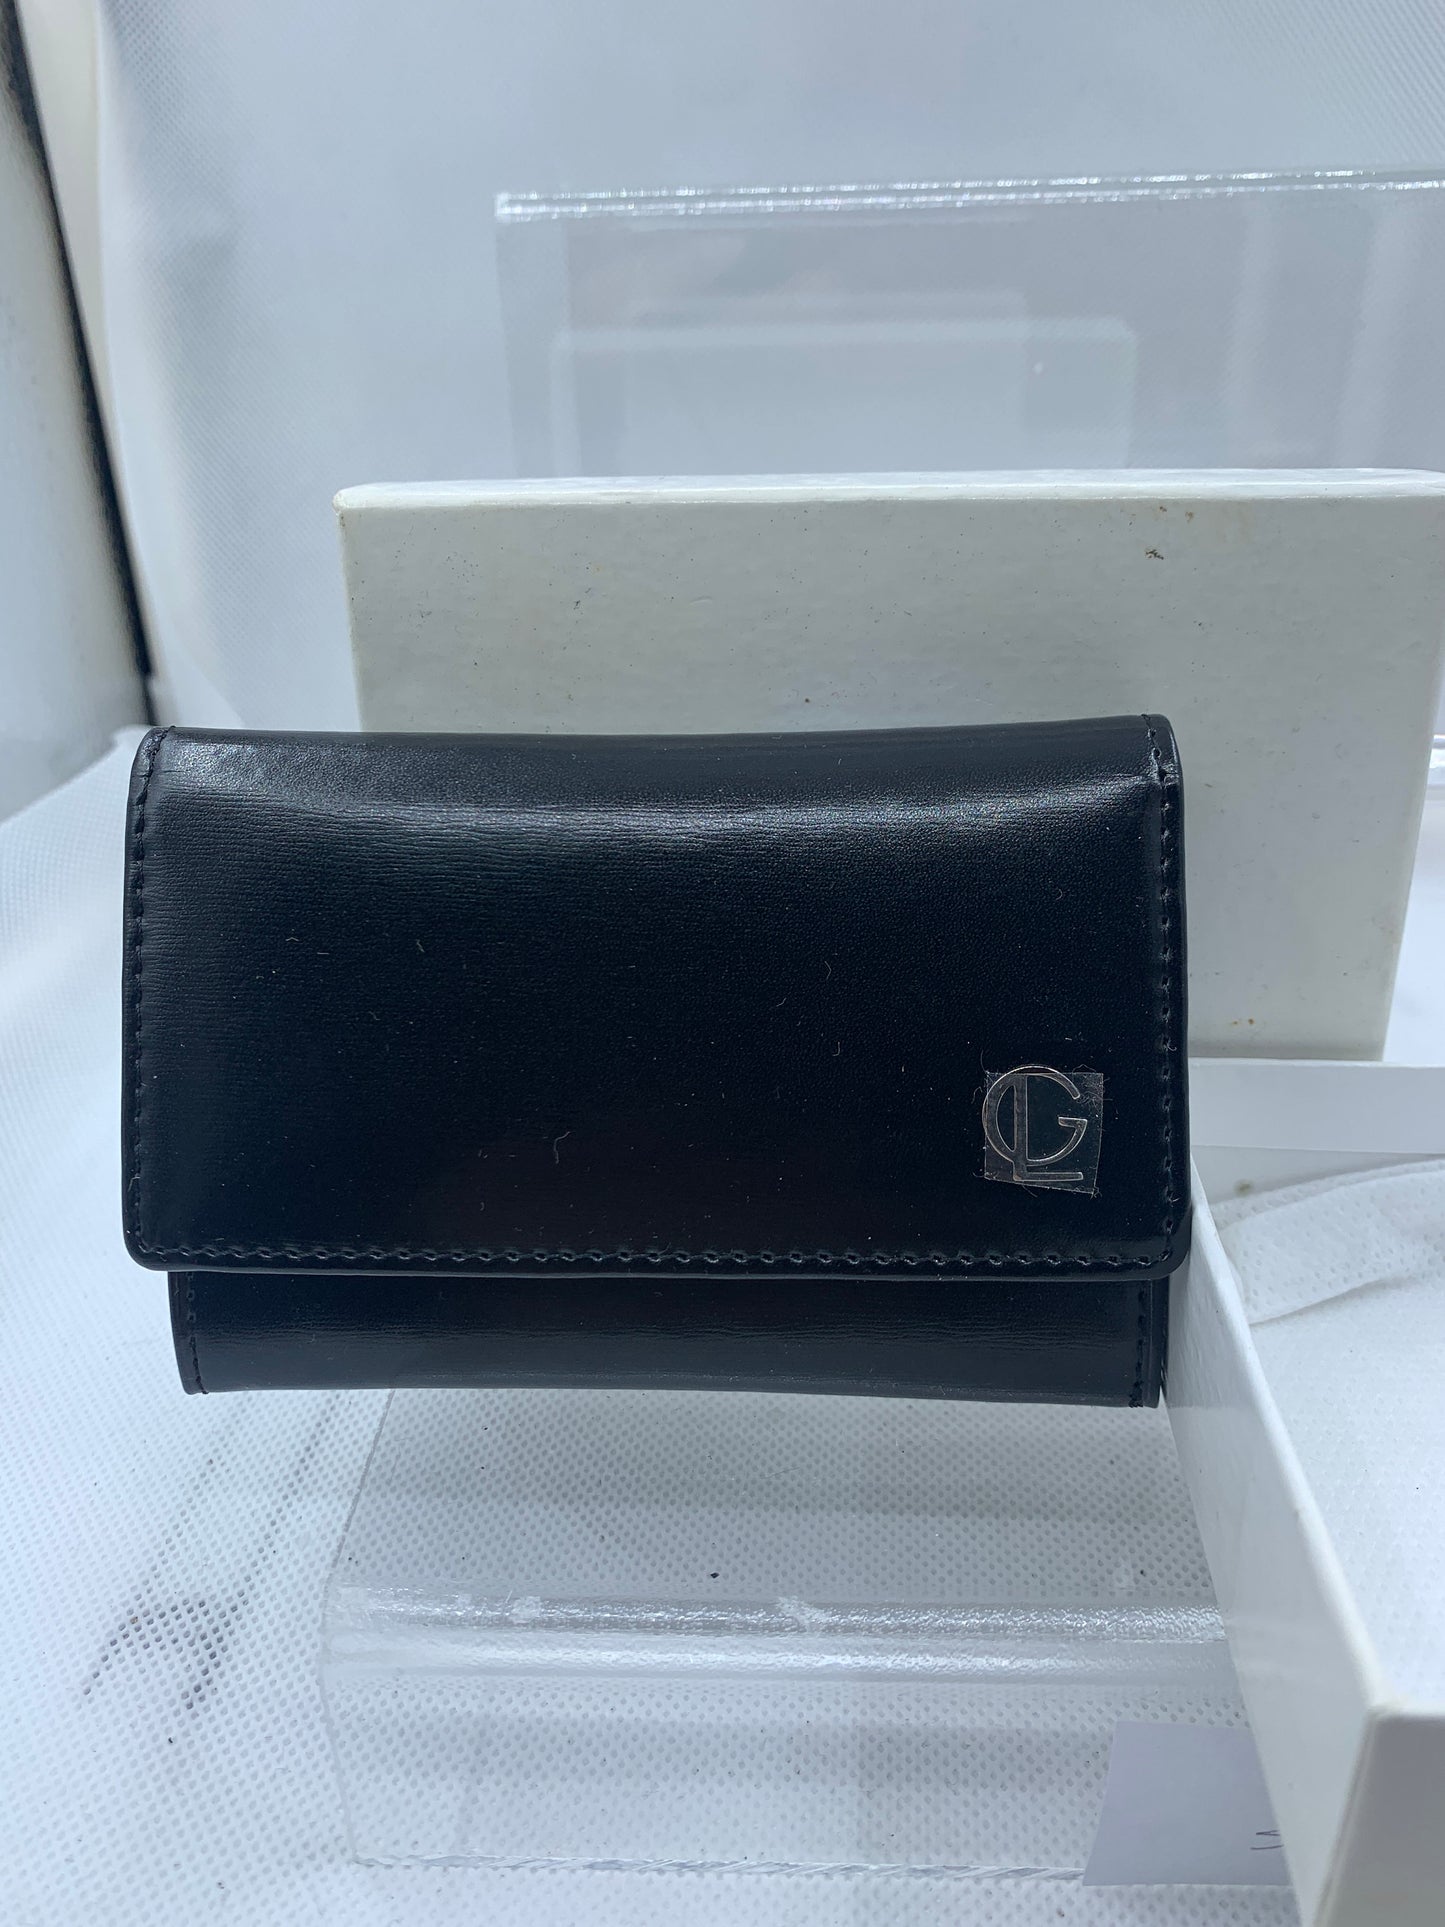 Guy Laroche wallet coins bag black 4" x 3"